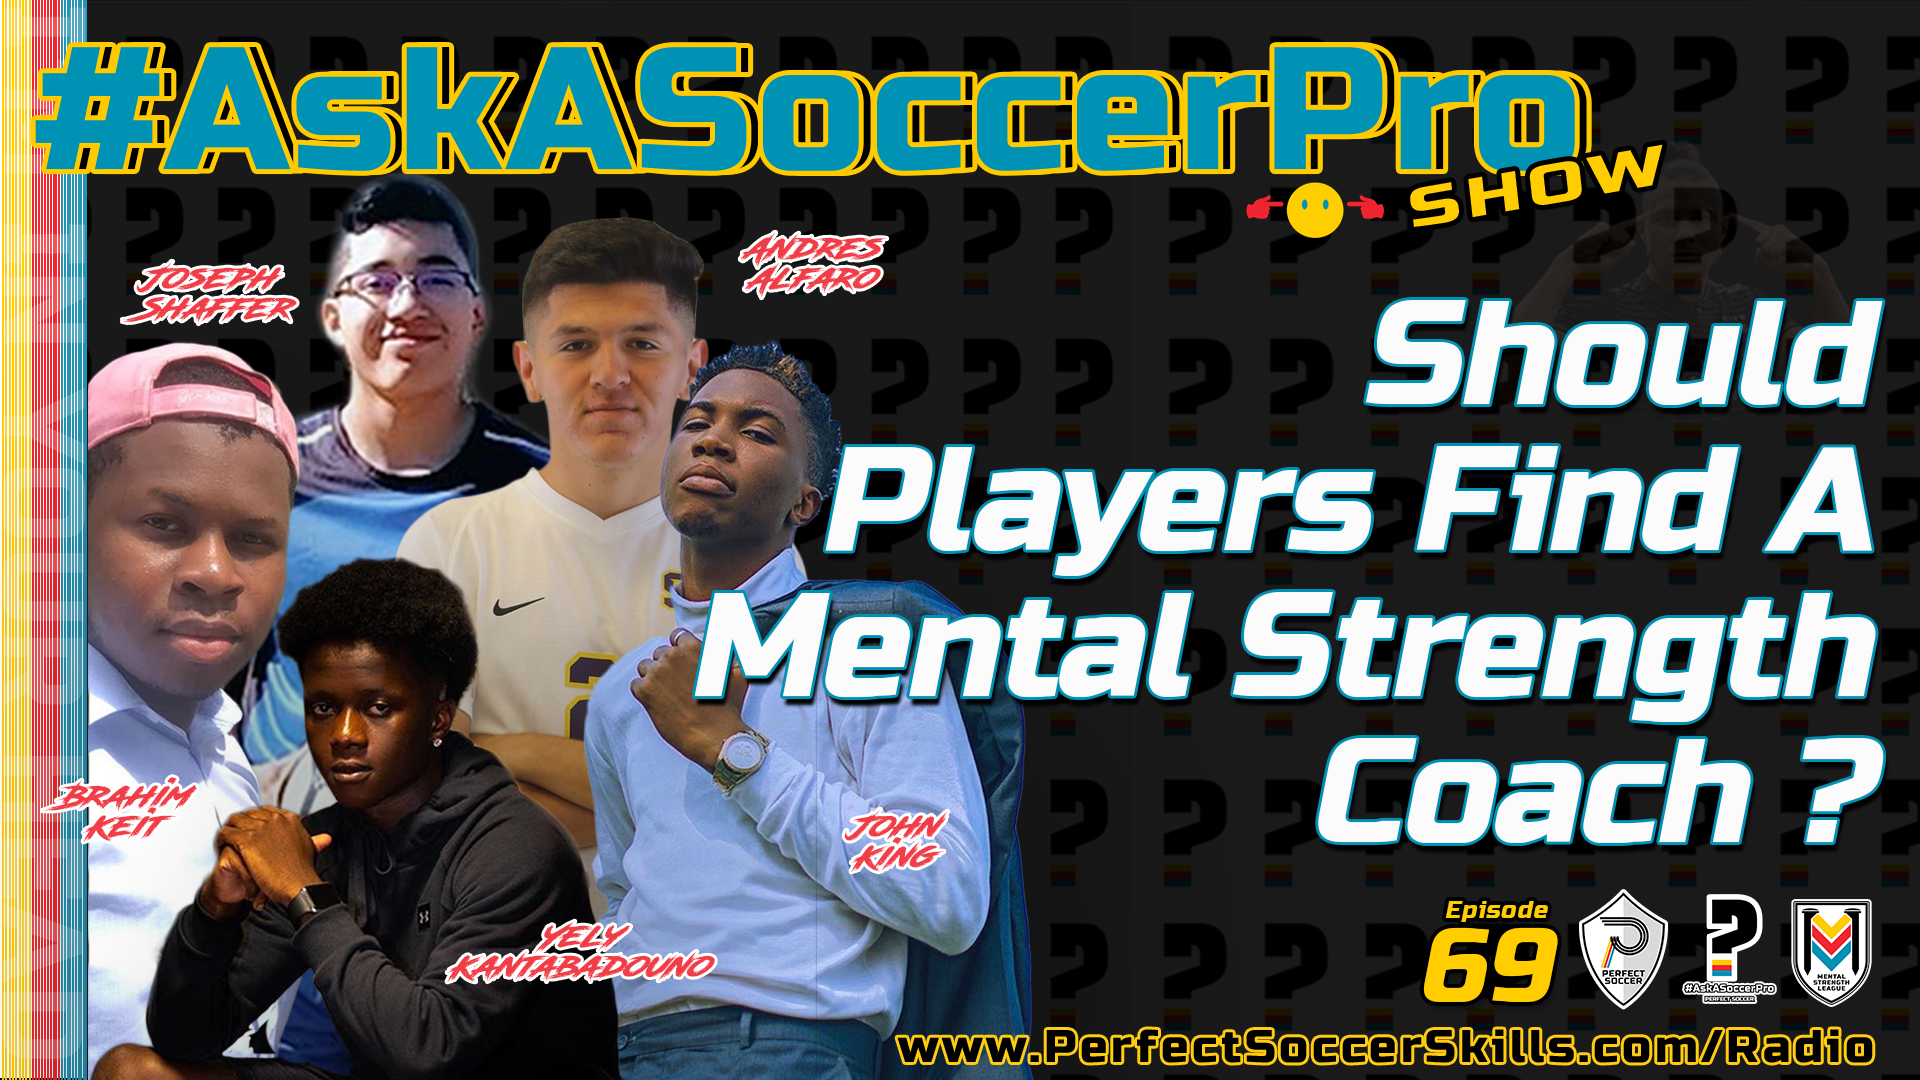 Ask A Soccer Pro Show, Quincy Amarikwa, Andres Alfaro, Yely Kantabadouno, Joseph Shaffer, John King